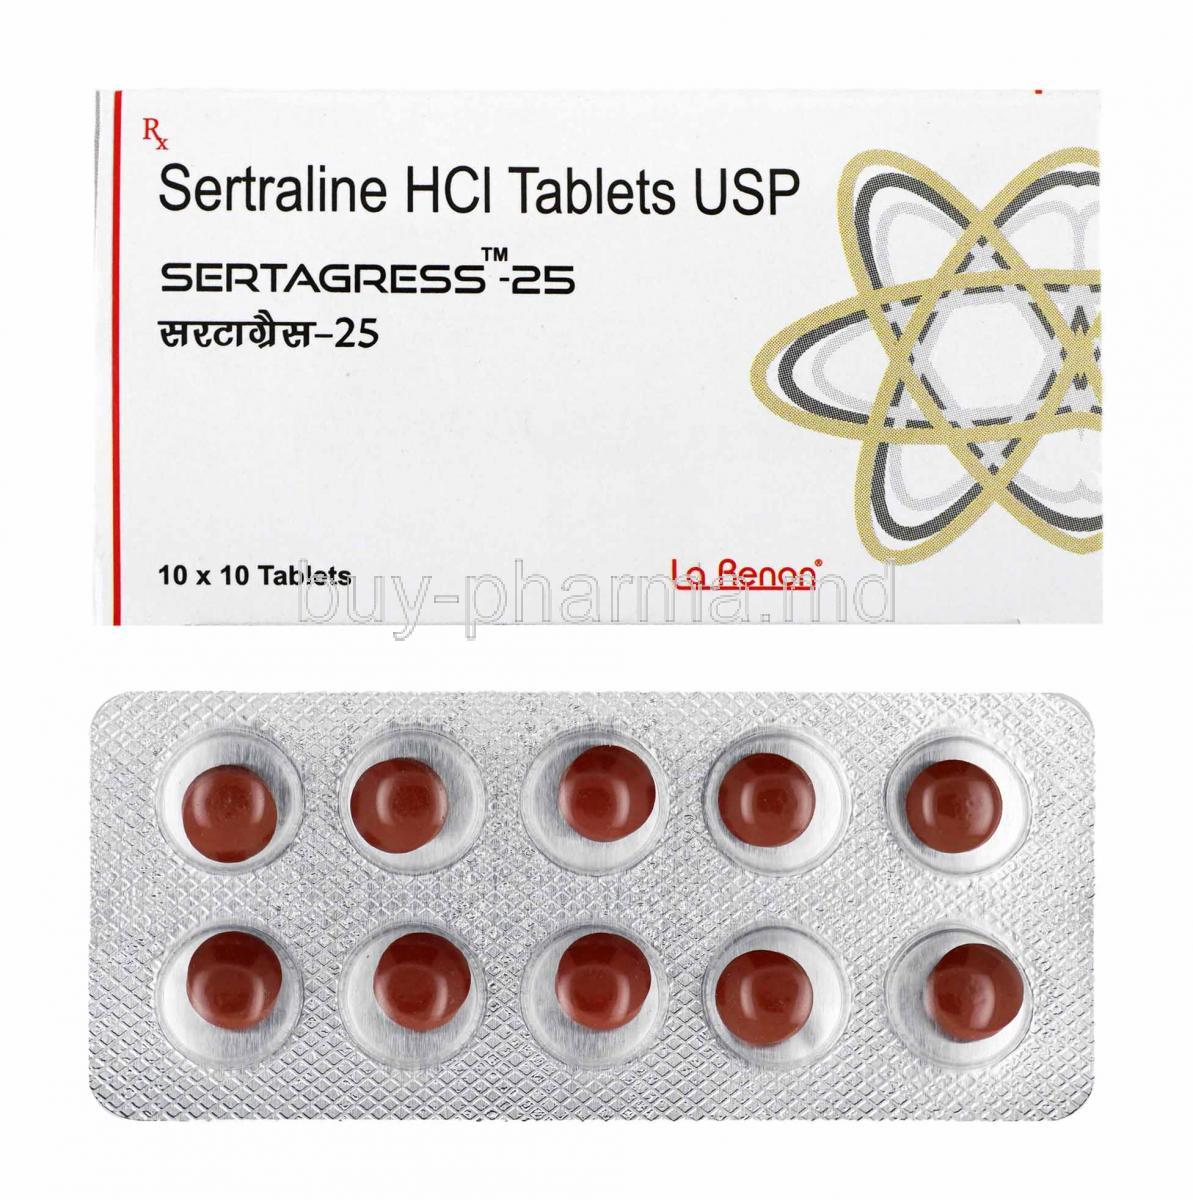 Sertagress, Sertraline 25mg box and tablets